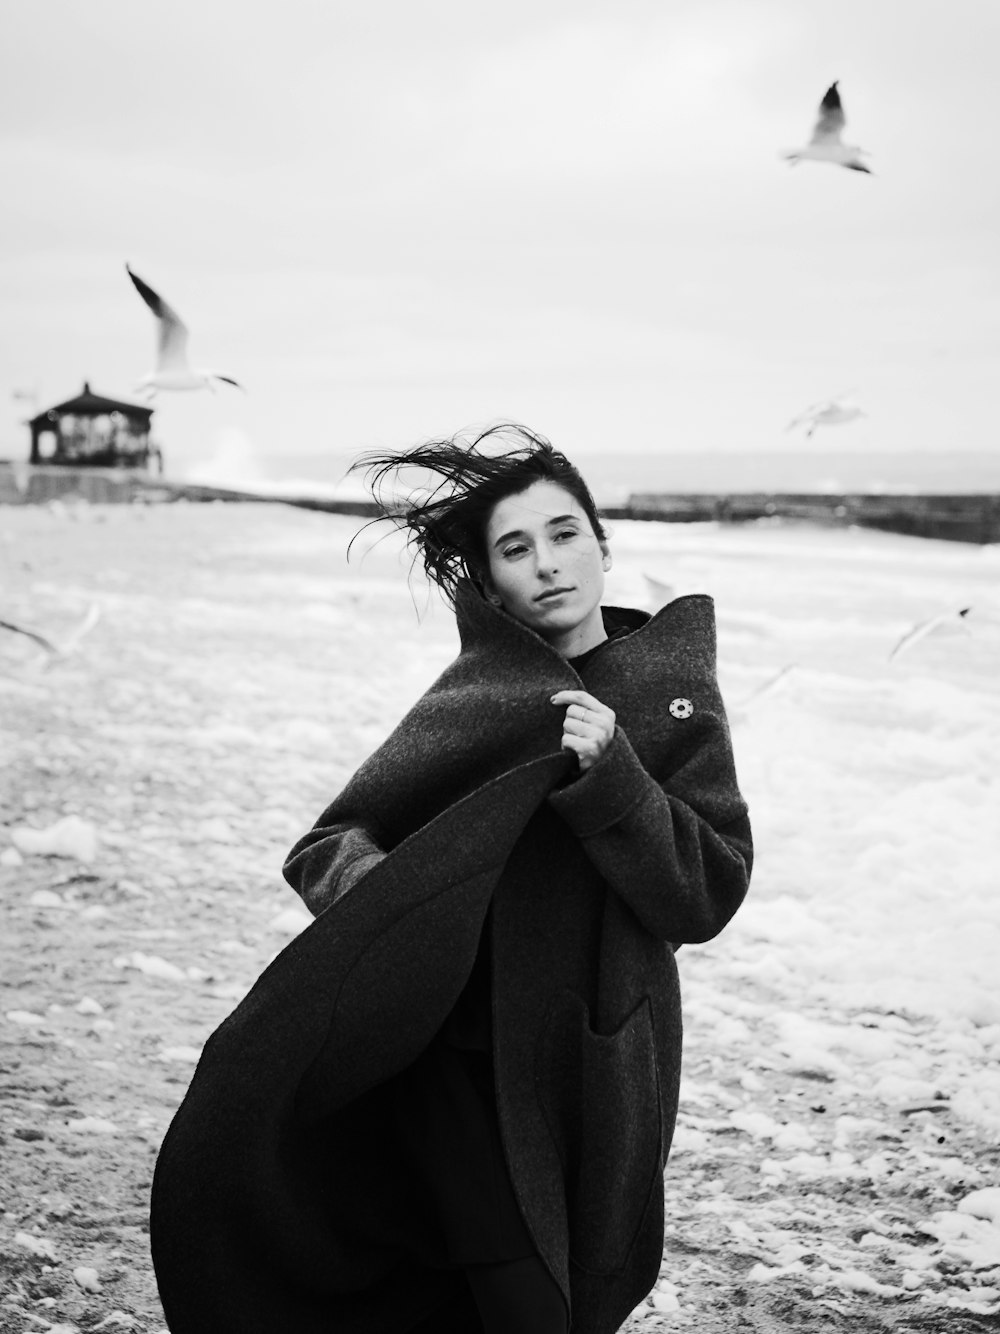 mulher no casaco preto andando com as gaivotas voando